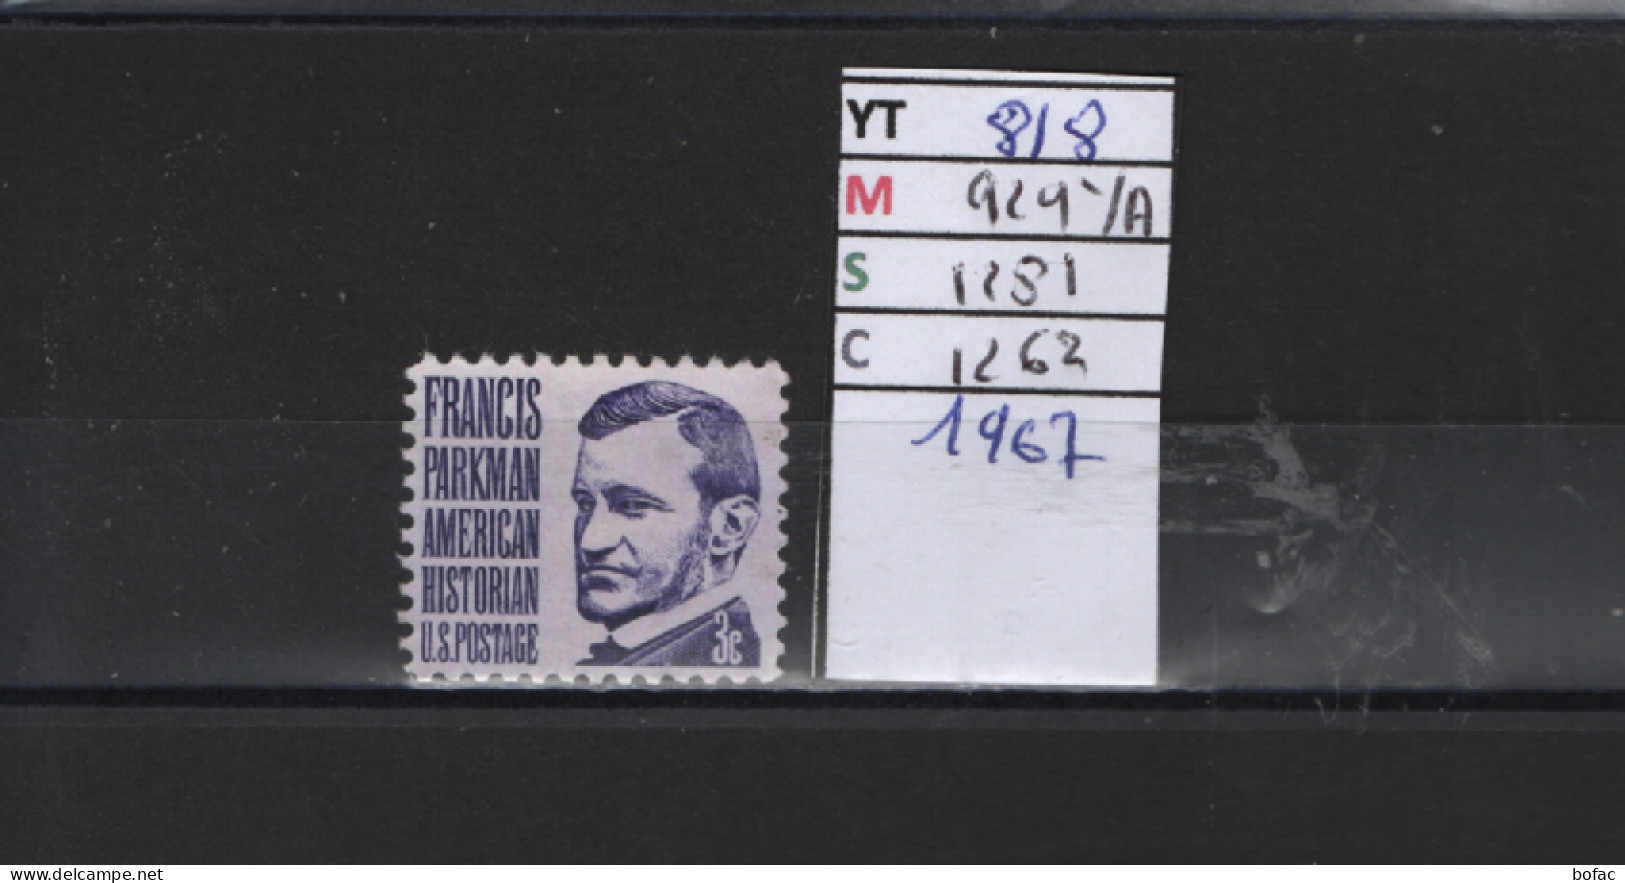 PRIX FIXE Obl   818 YT 929YA MIC 1281 SCO 1262 GIB Francis Parkman 1968    58A/11 - Used Stamps